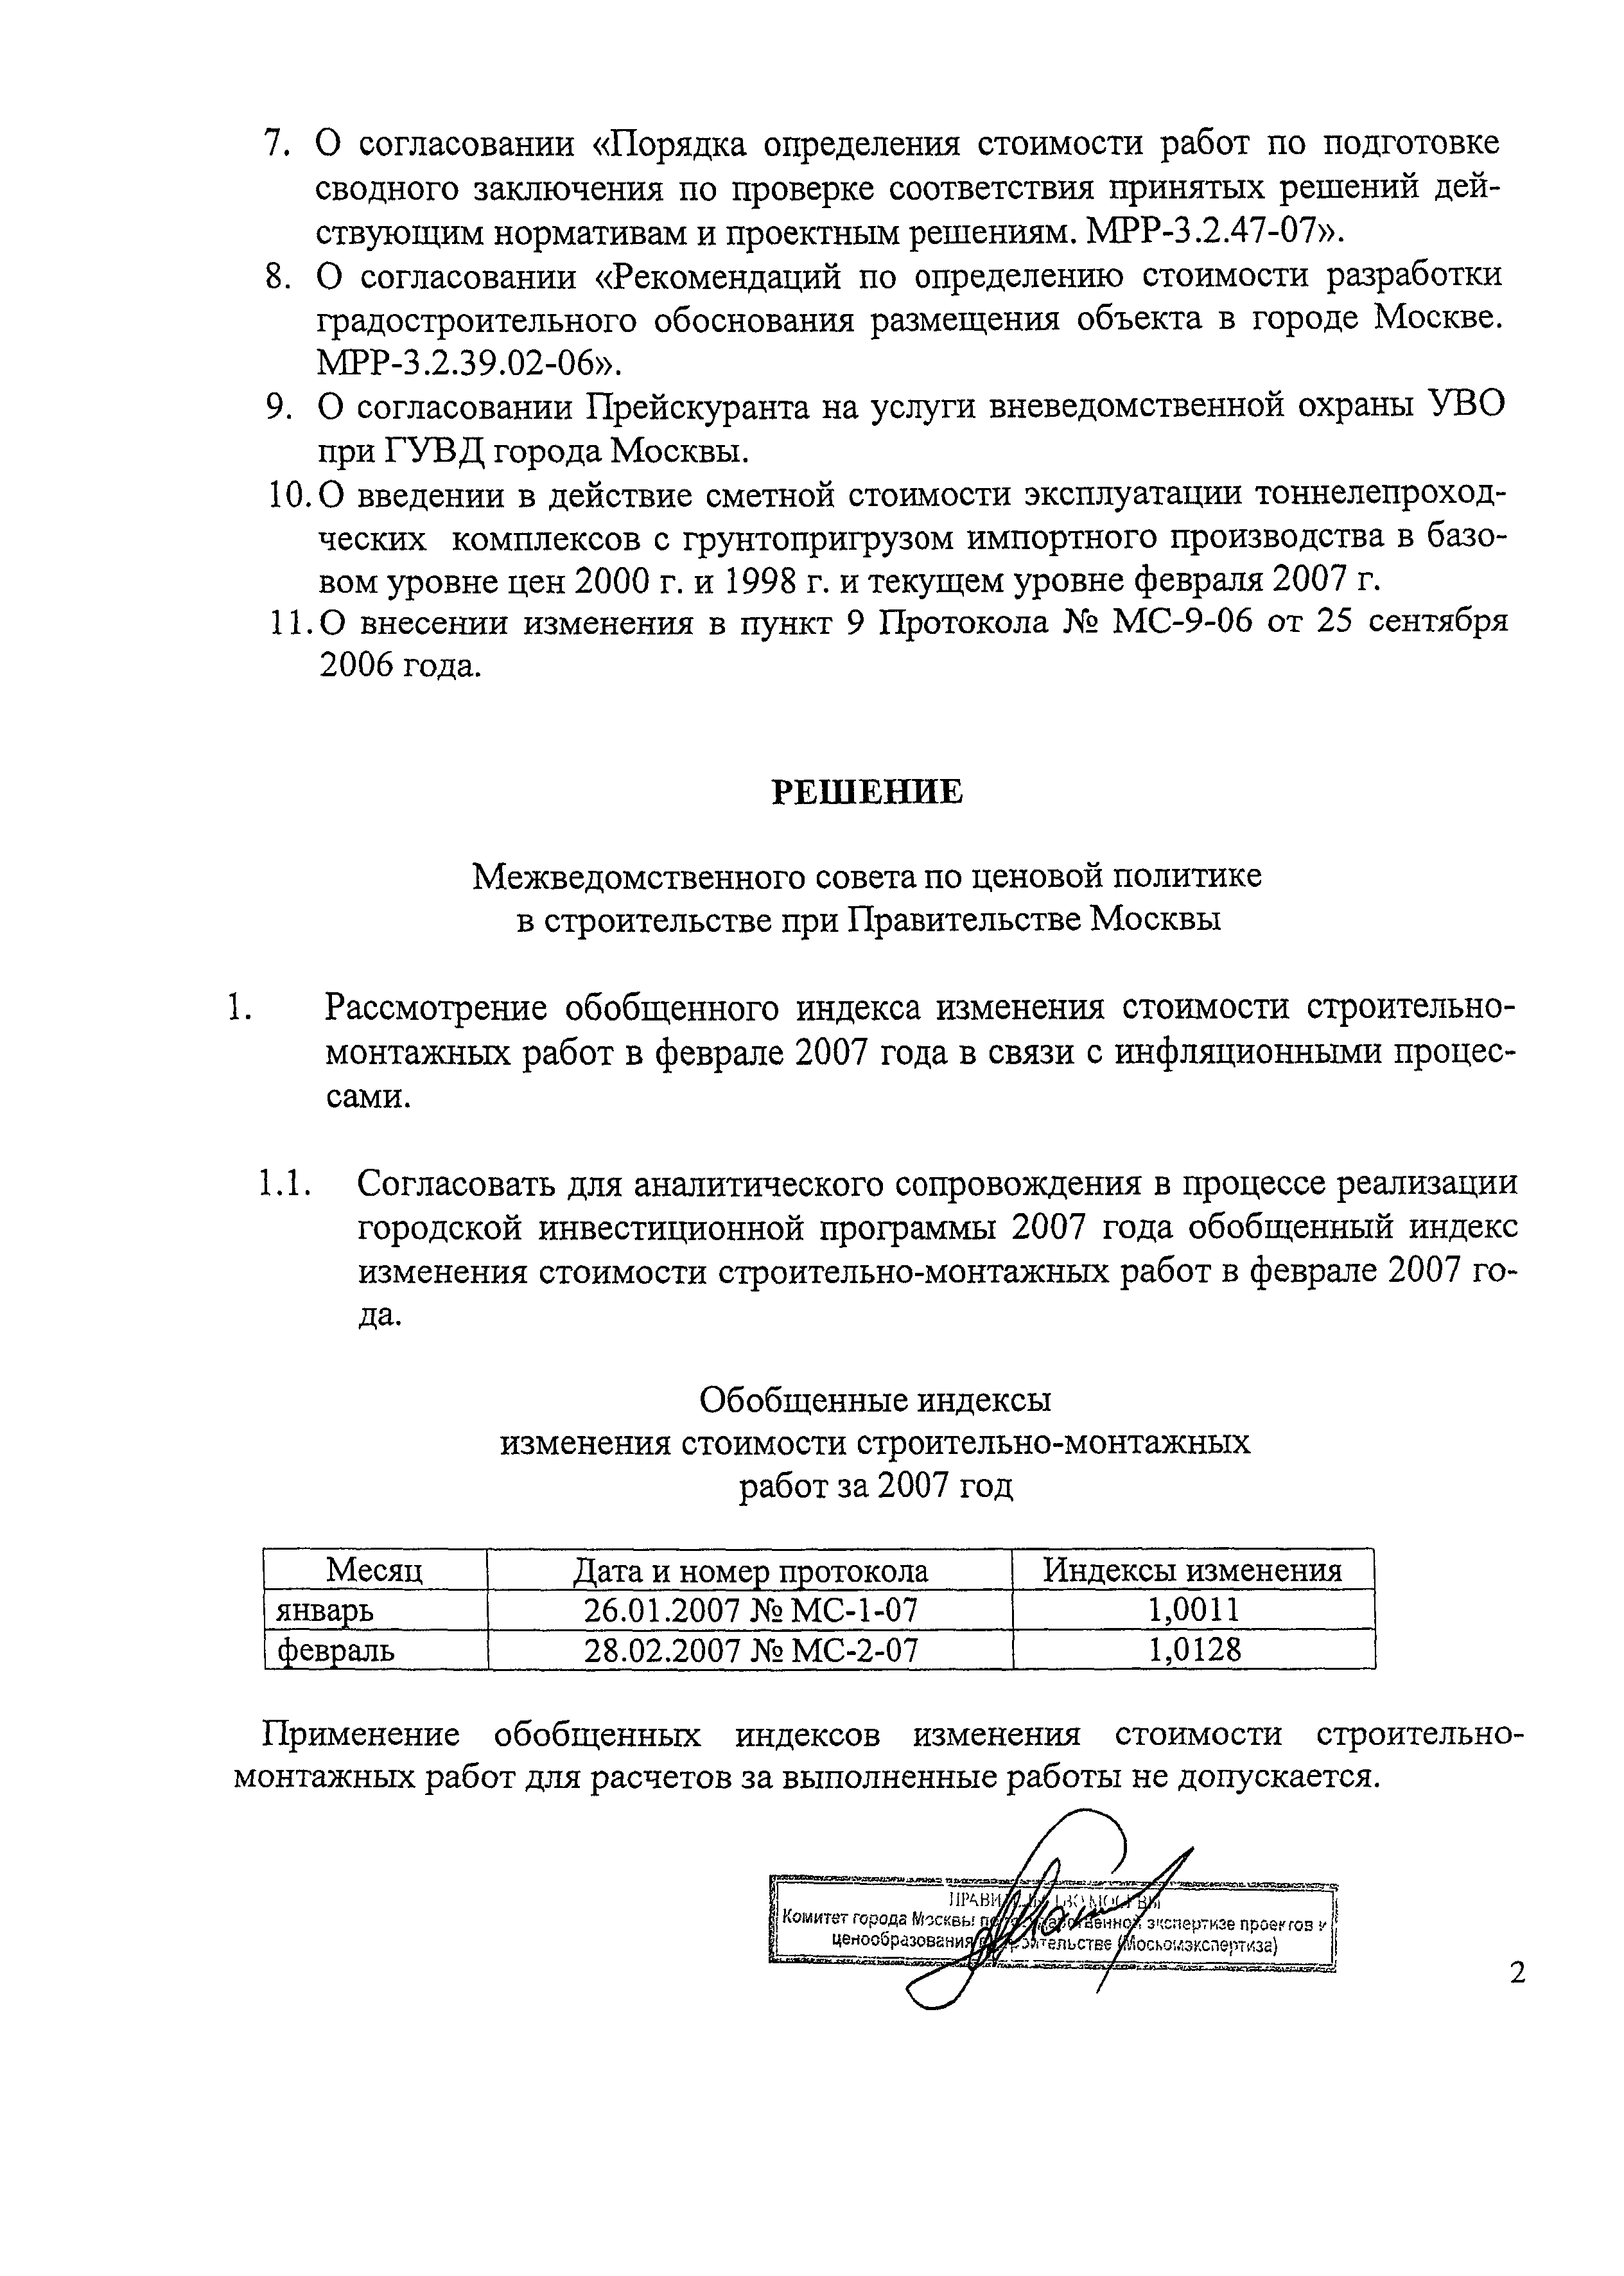 Протокол МС-2-07